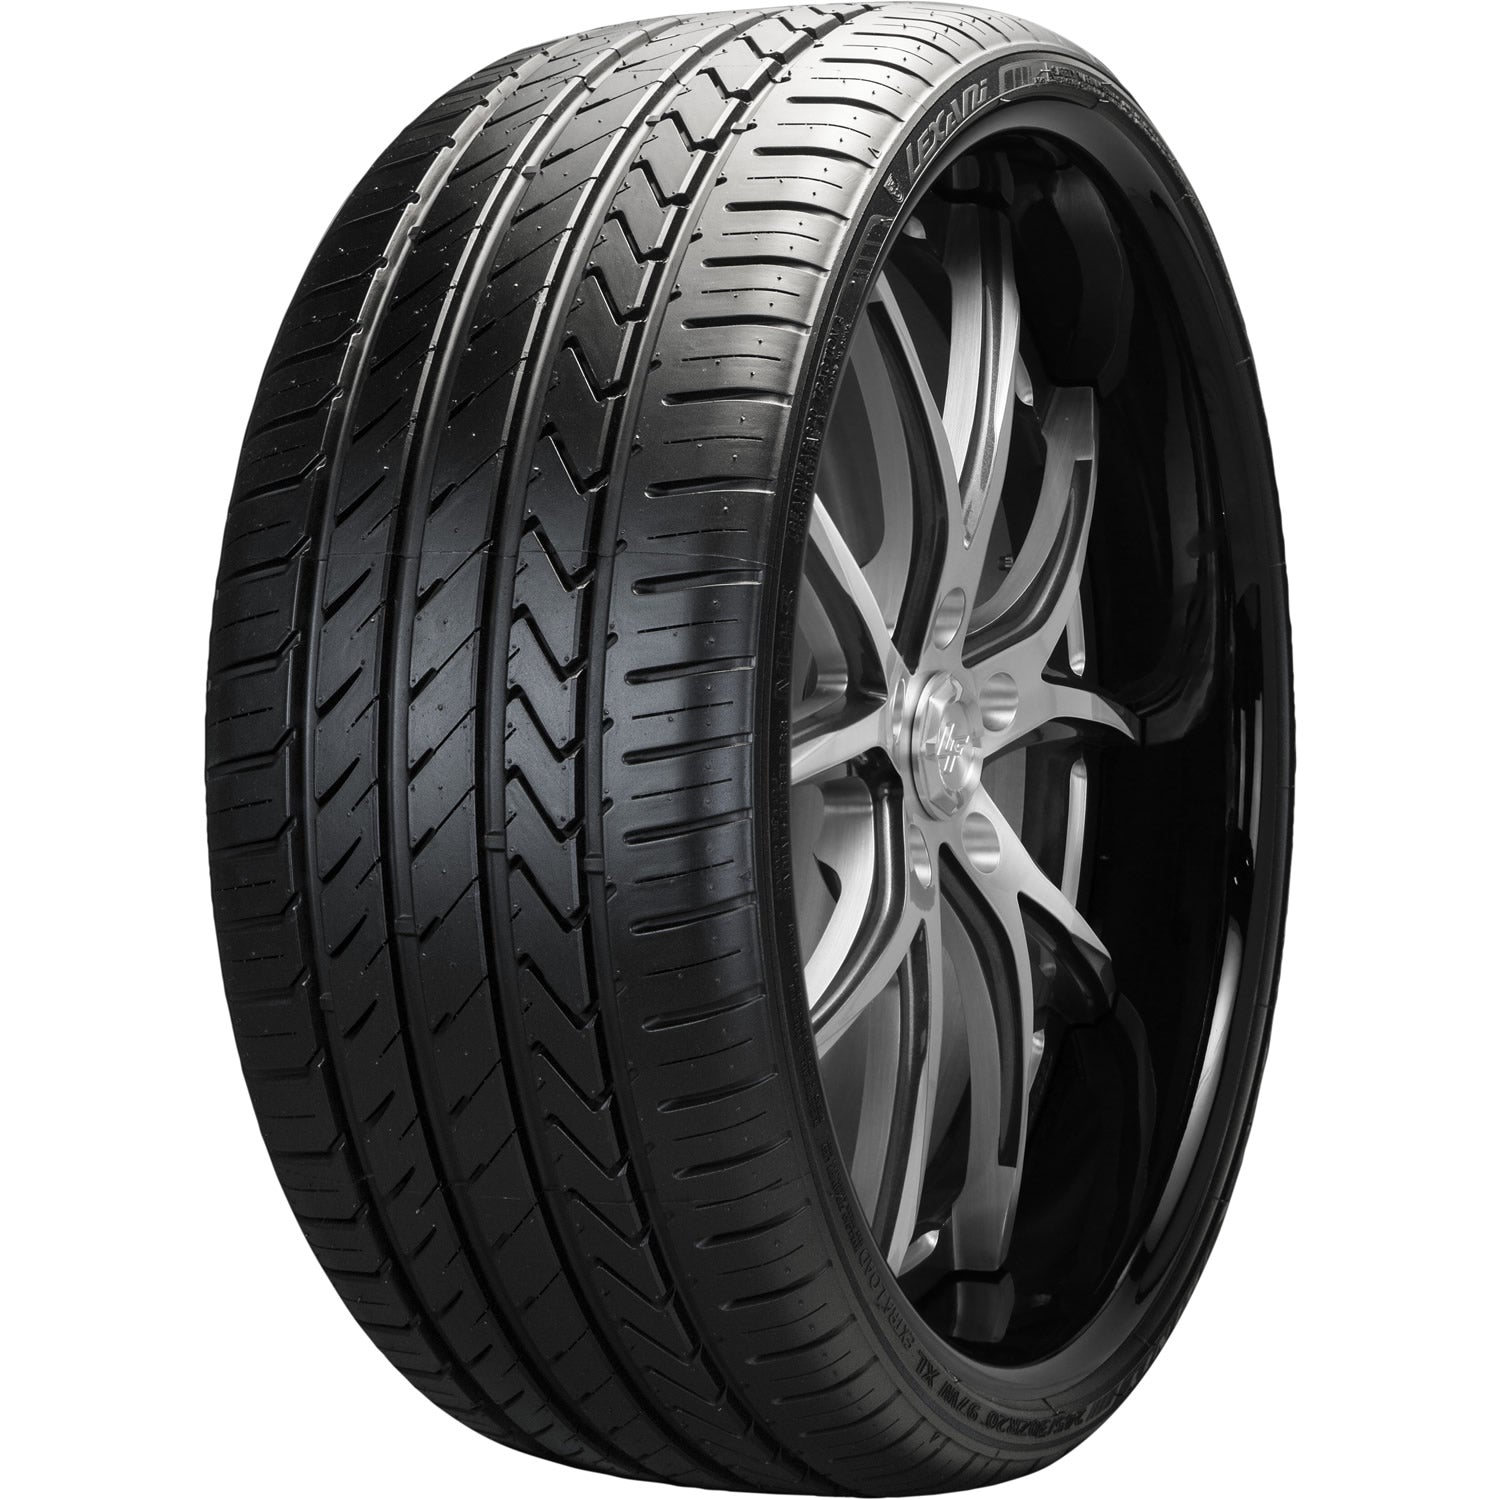 LEXANI LX-TWENTY 265/45ZR20 (29.4X10.5R 20) Tires